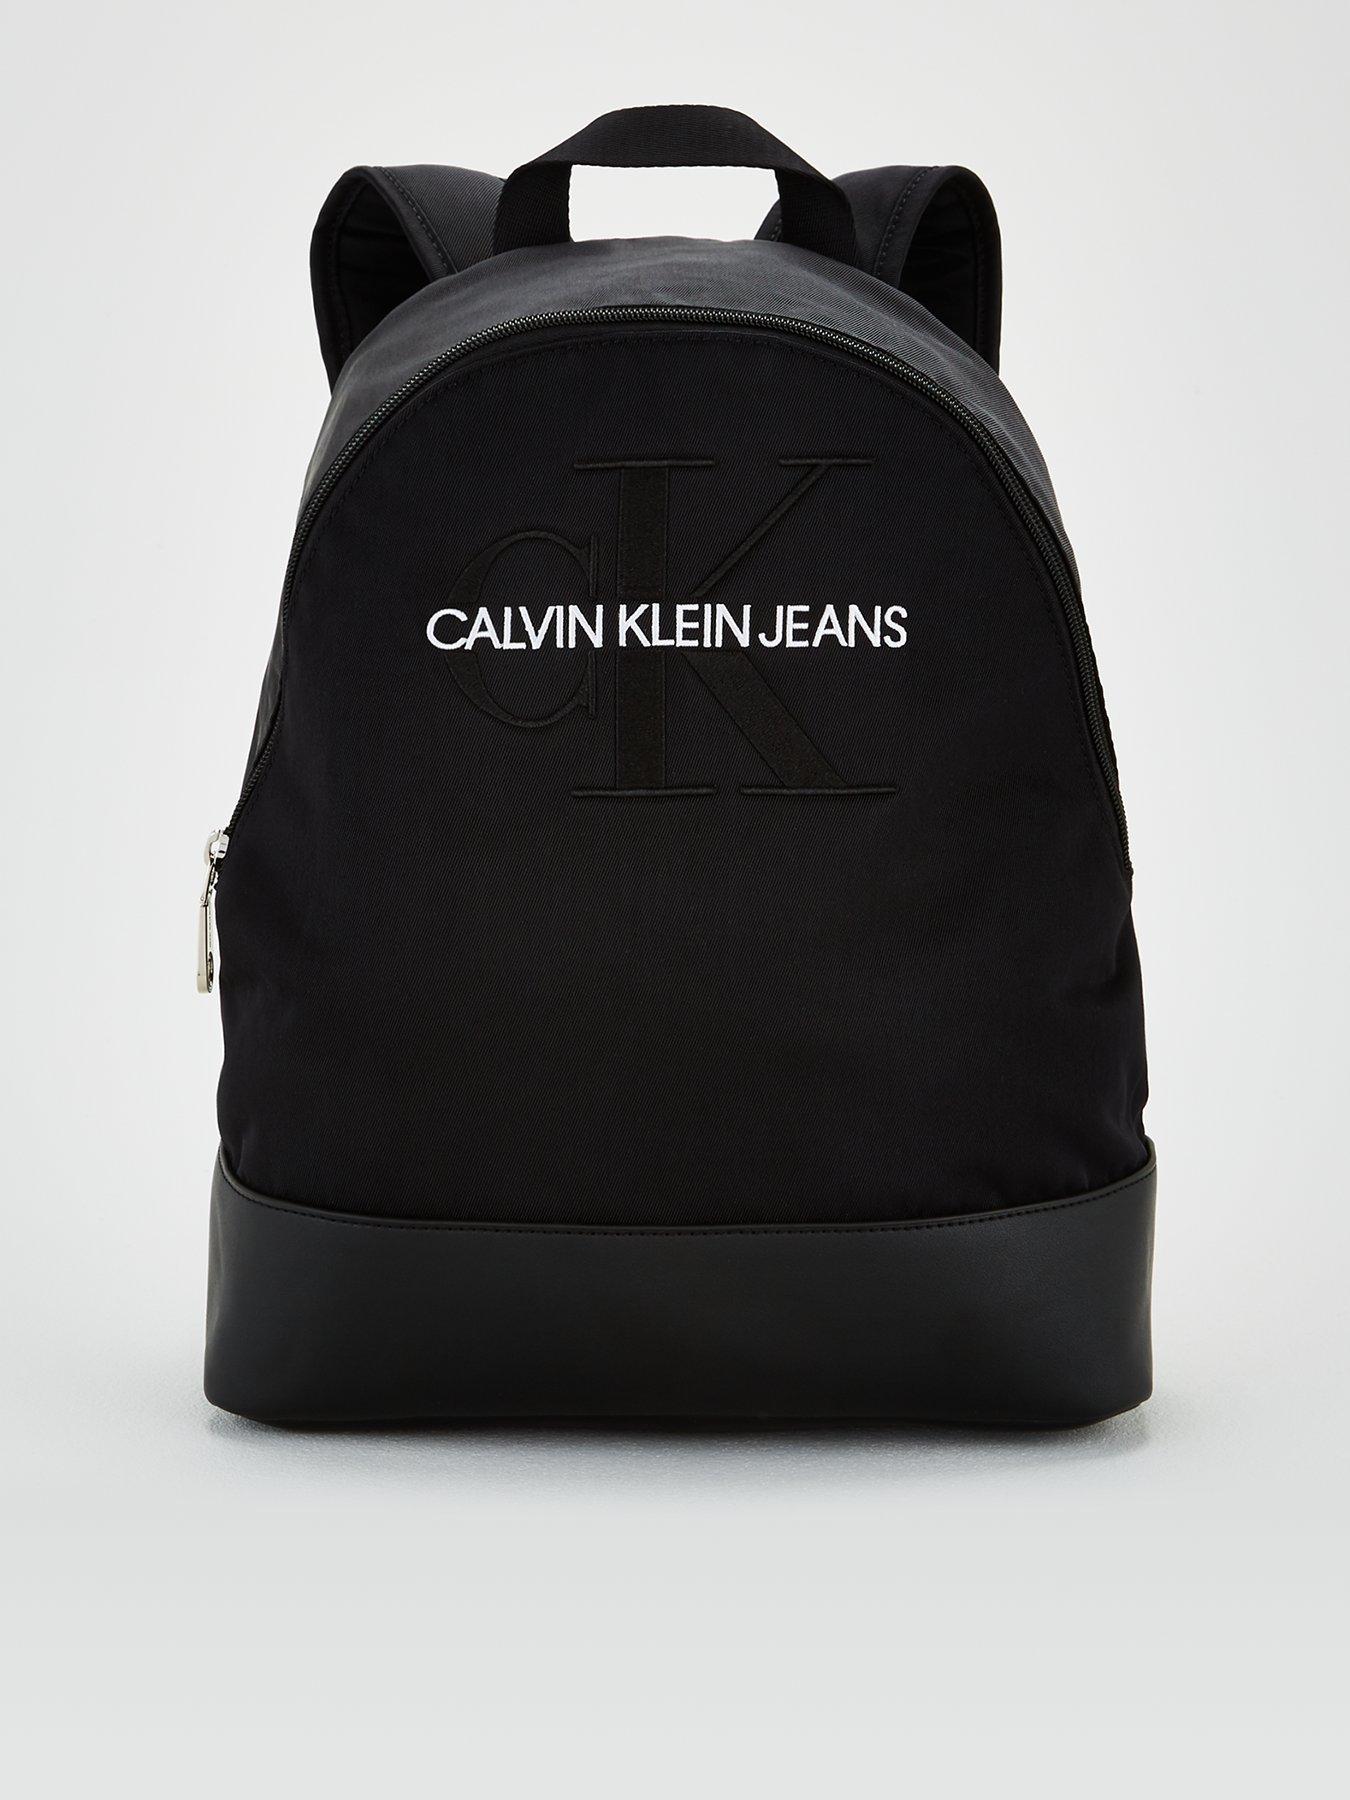 black backpack calvin klein